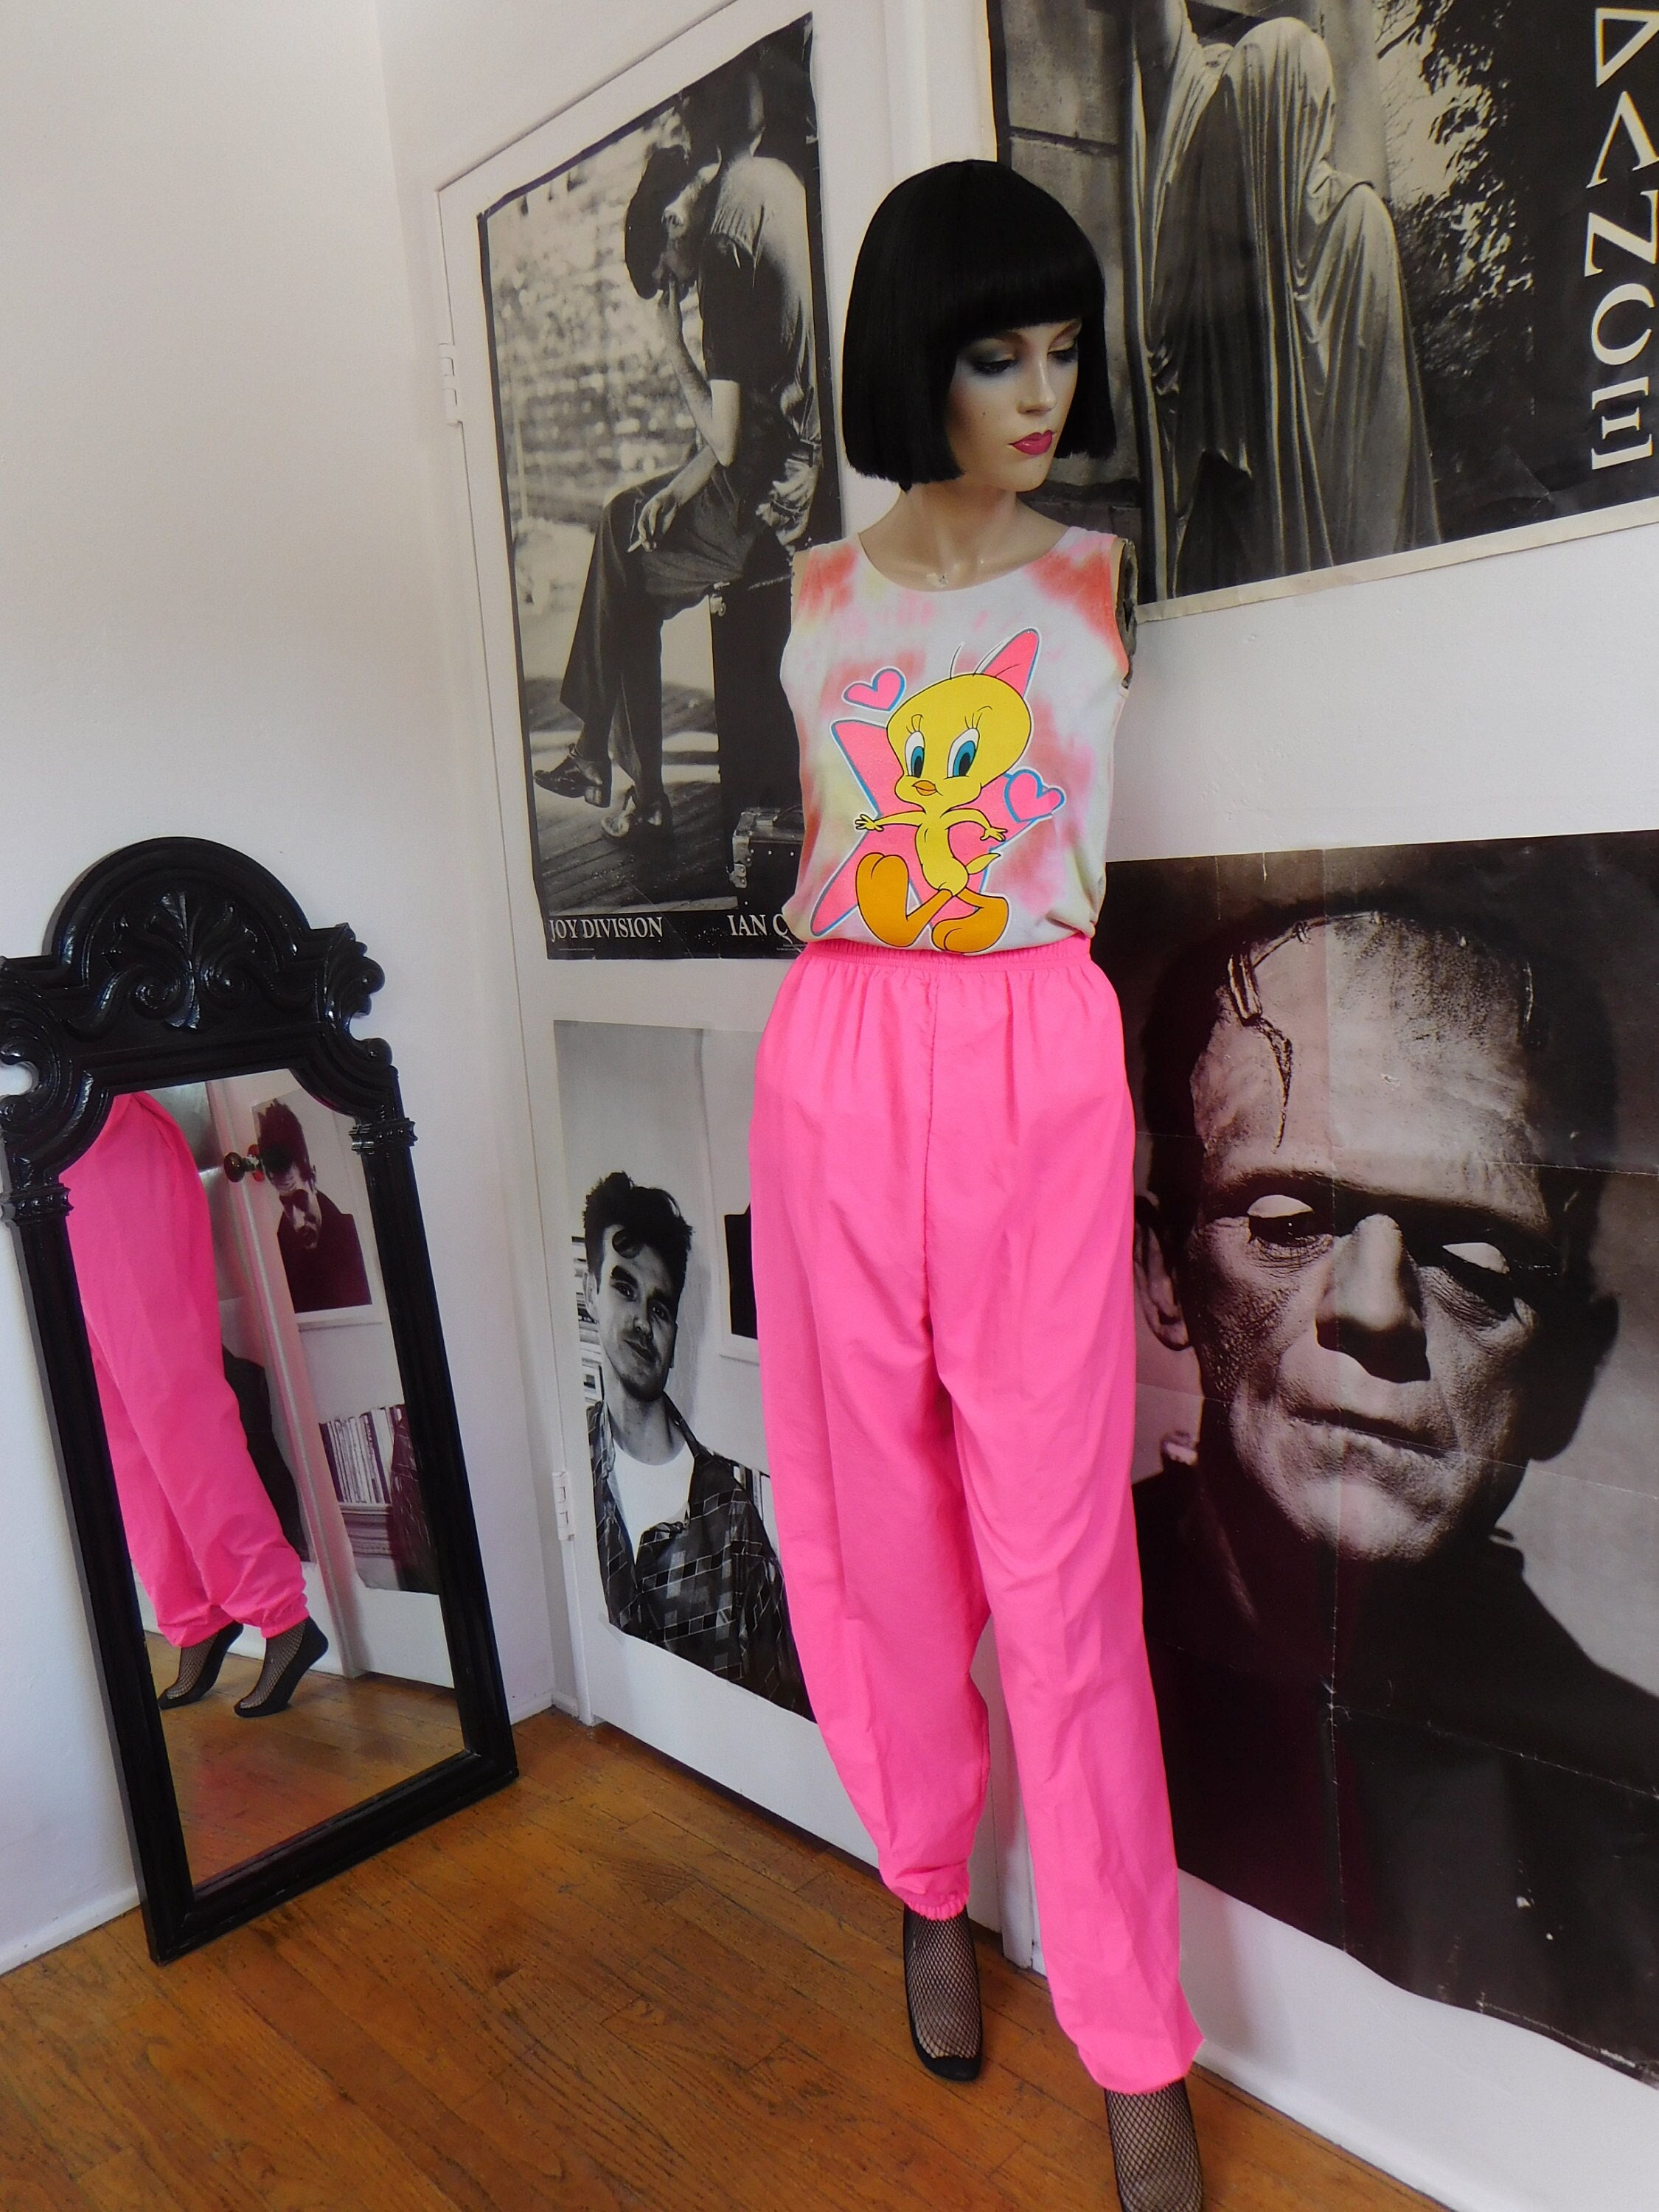 Pink Pants Neon Colors Women Track Pants Vintage 80s Windbreaker